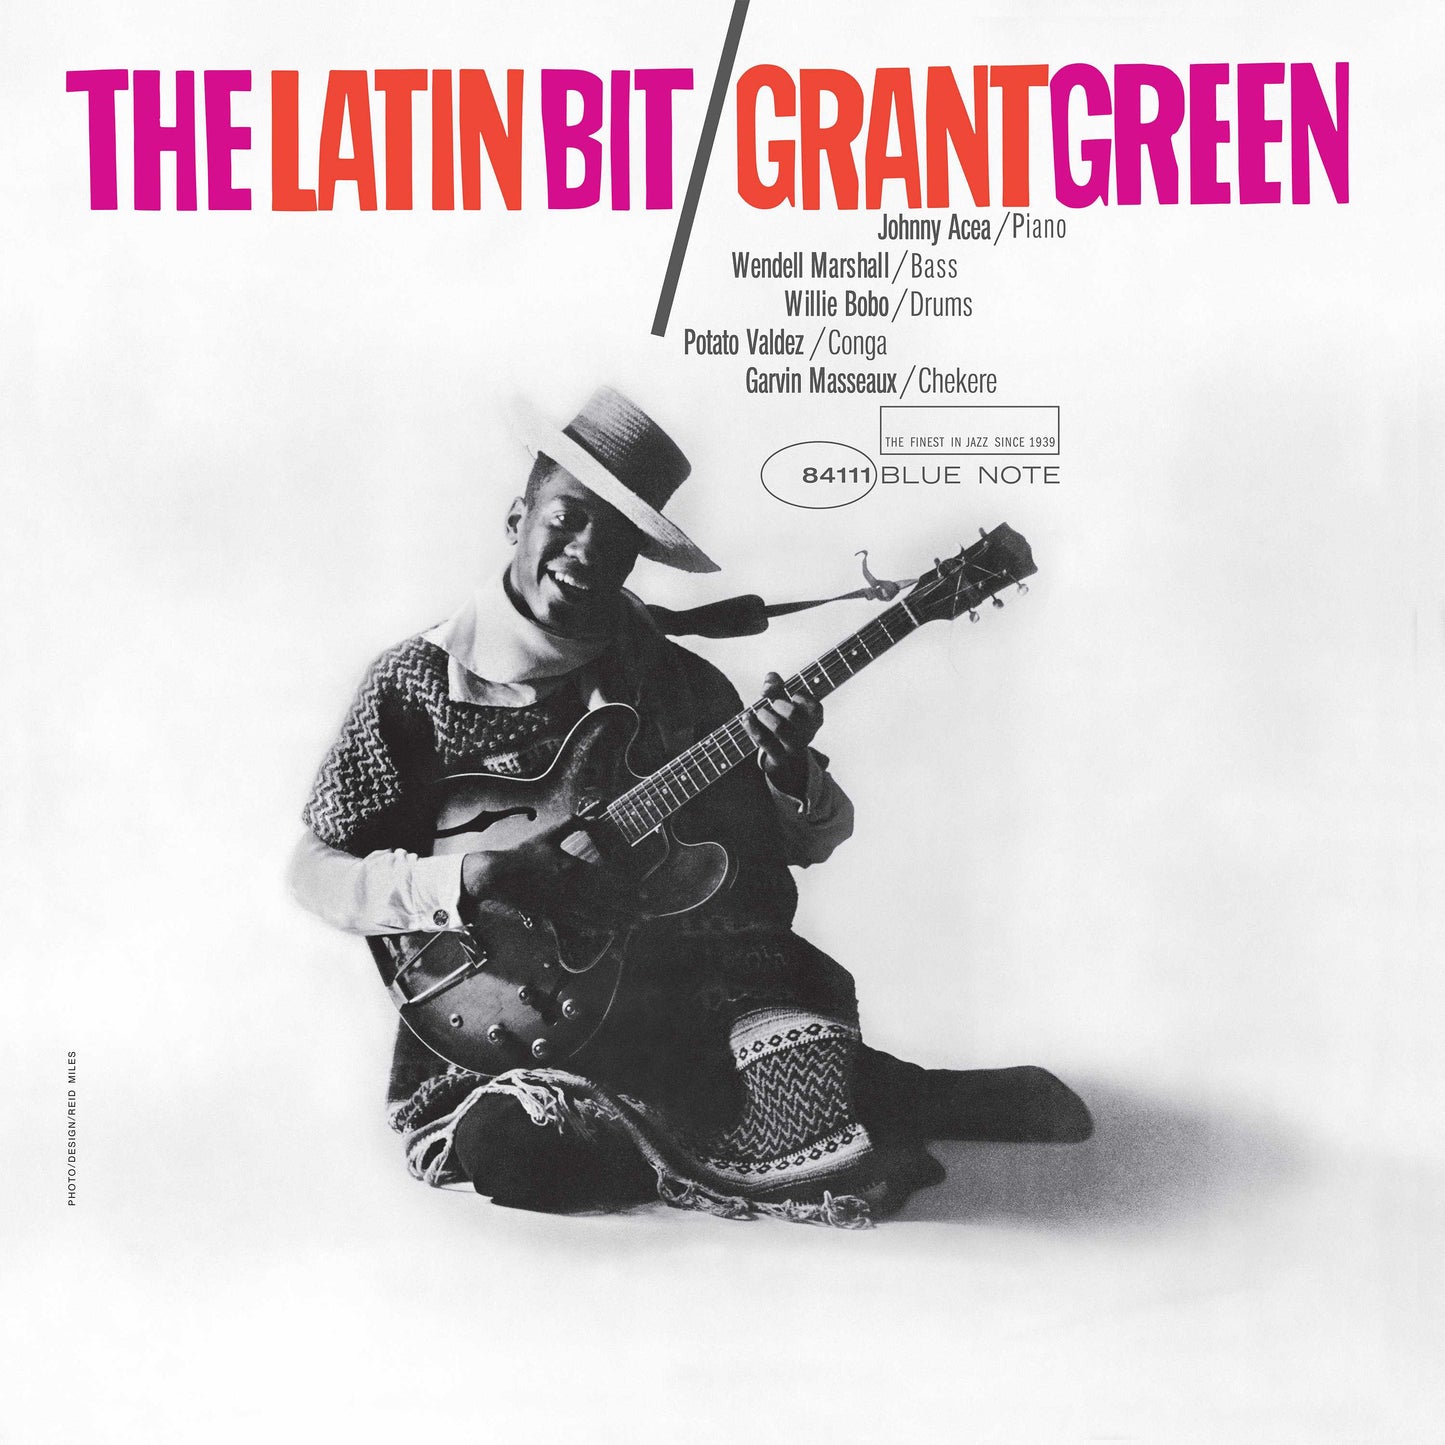 Grant Green – The Latin Bit – Tone Poet LP